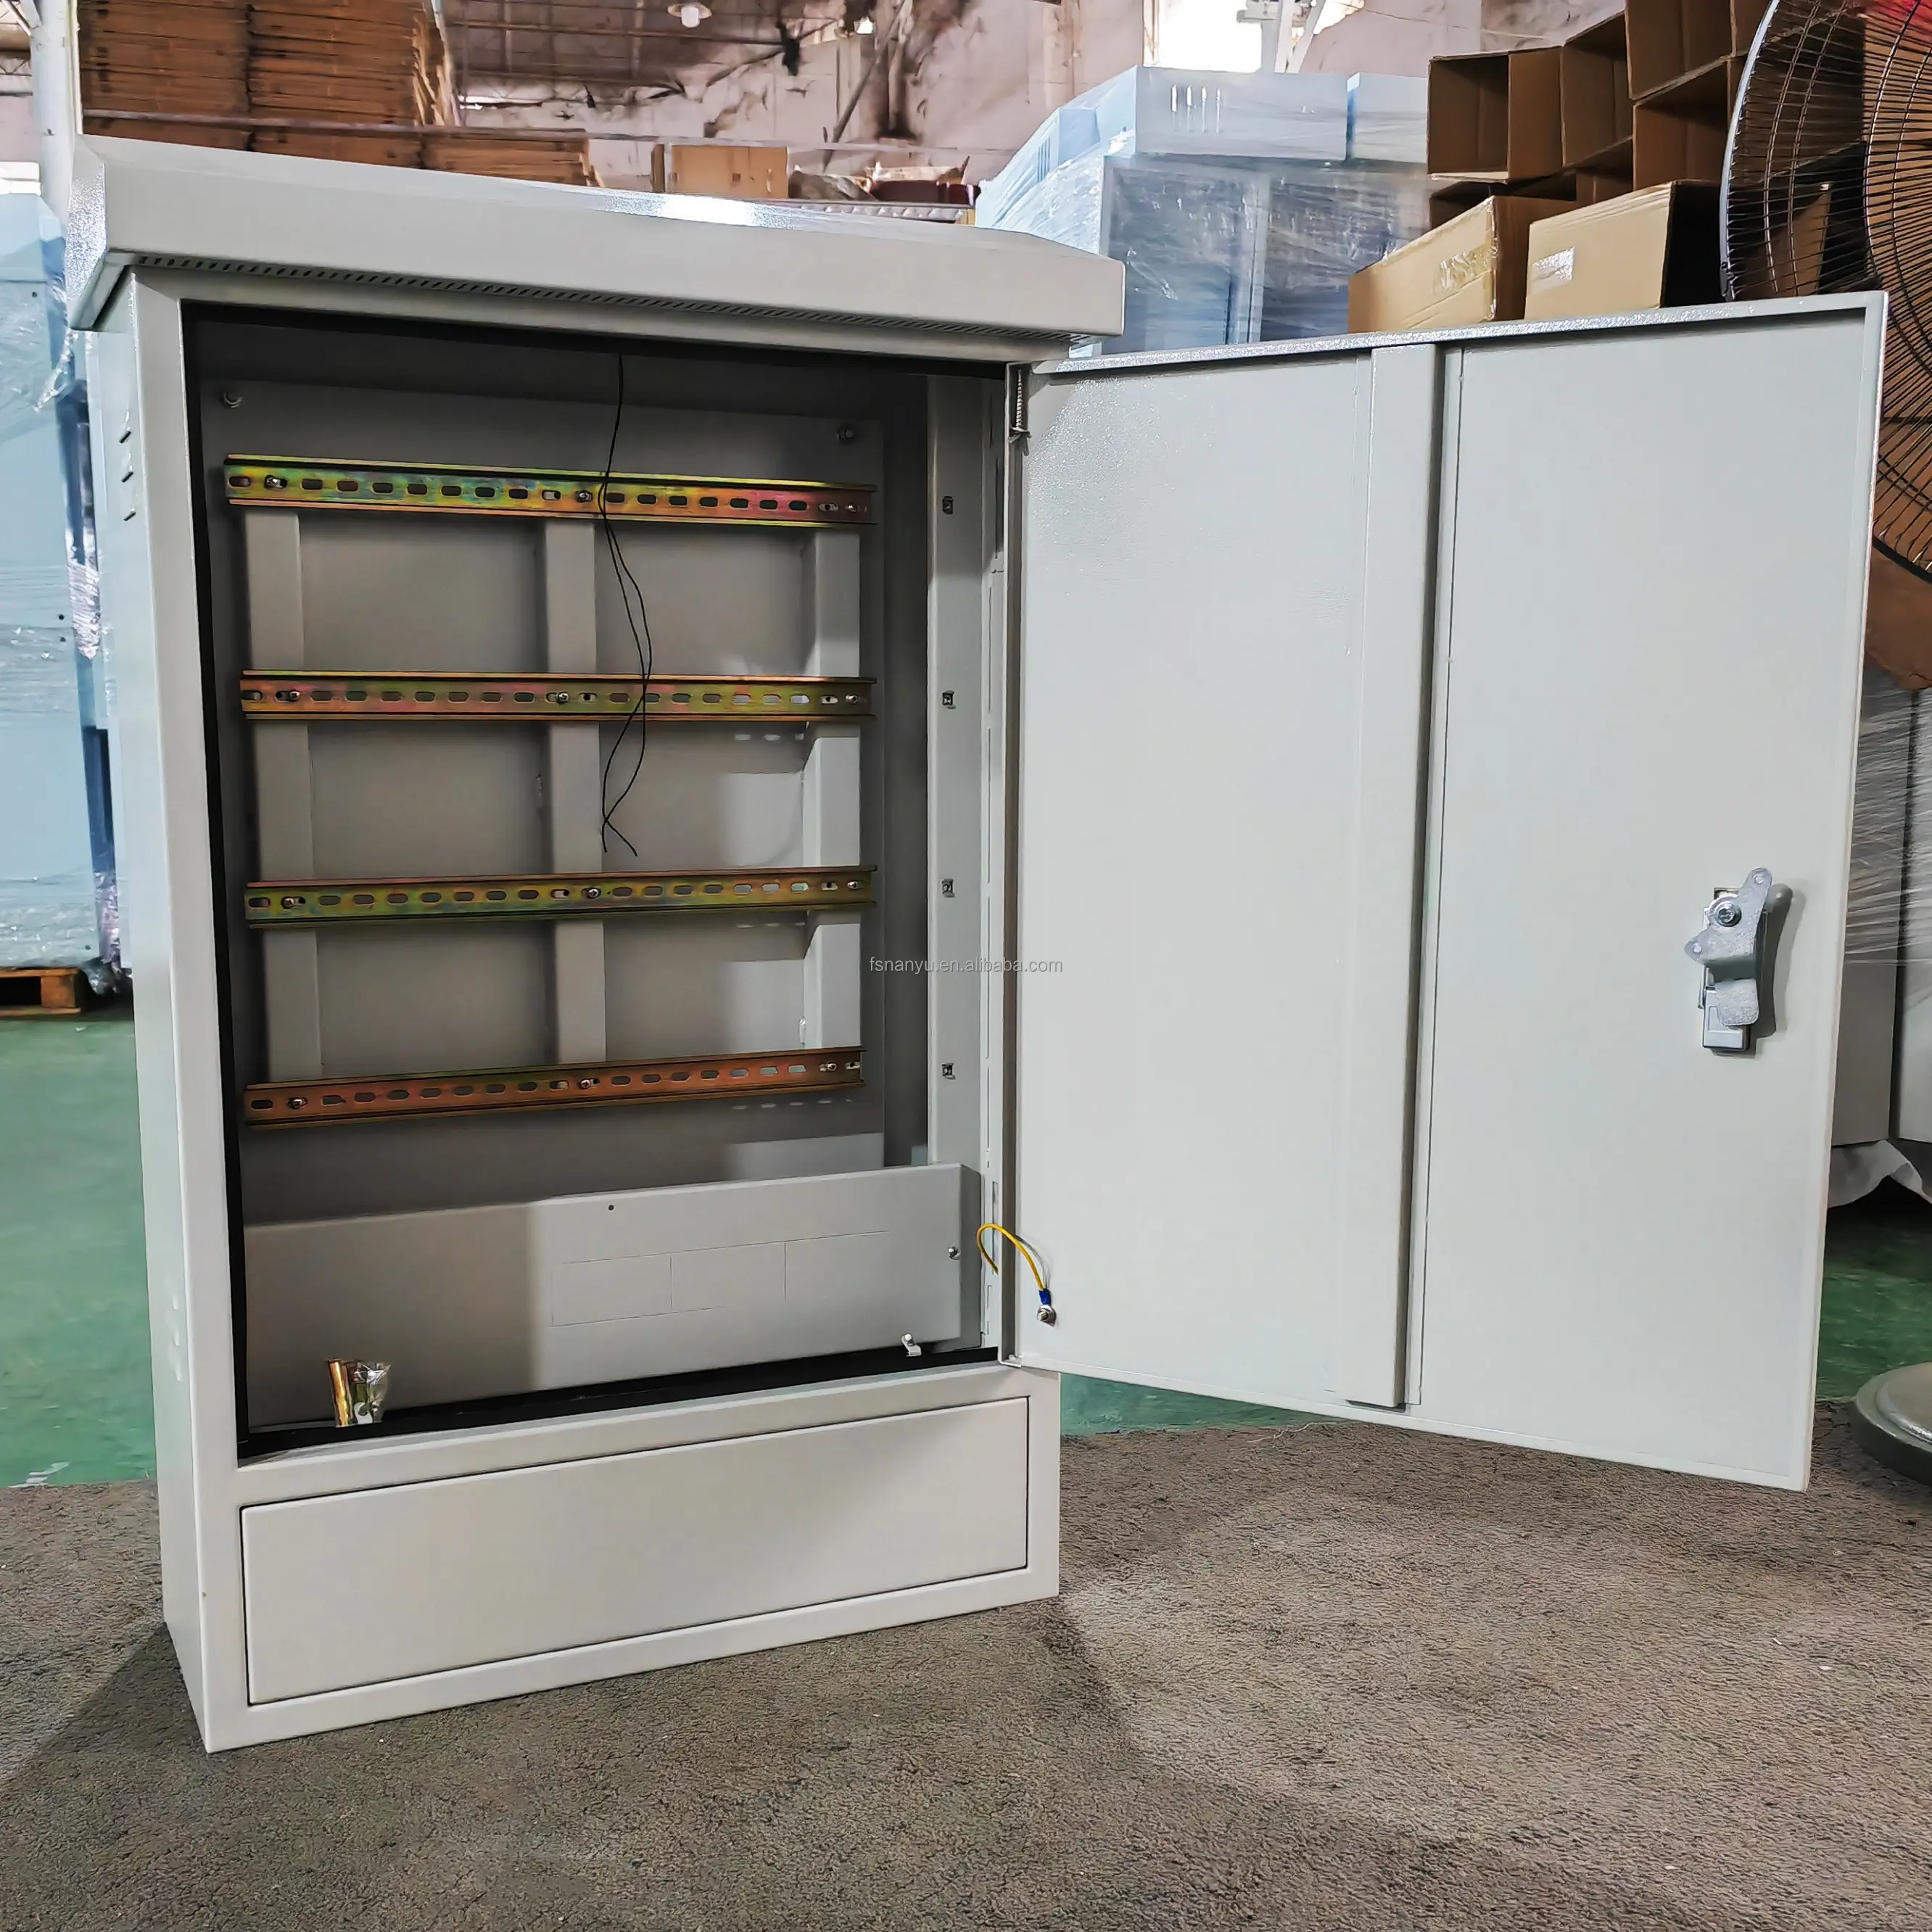 Outdoor waterproof IP66 electrical control boxes distribution panel with door lock